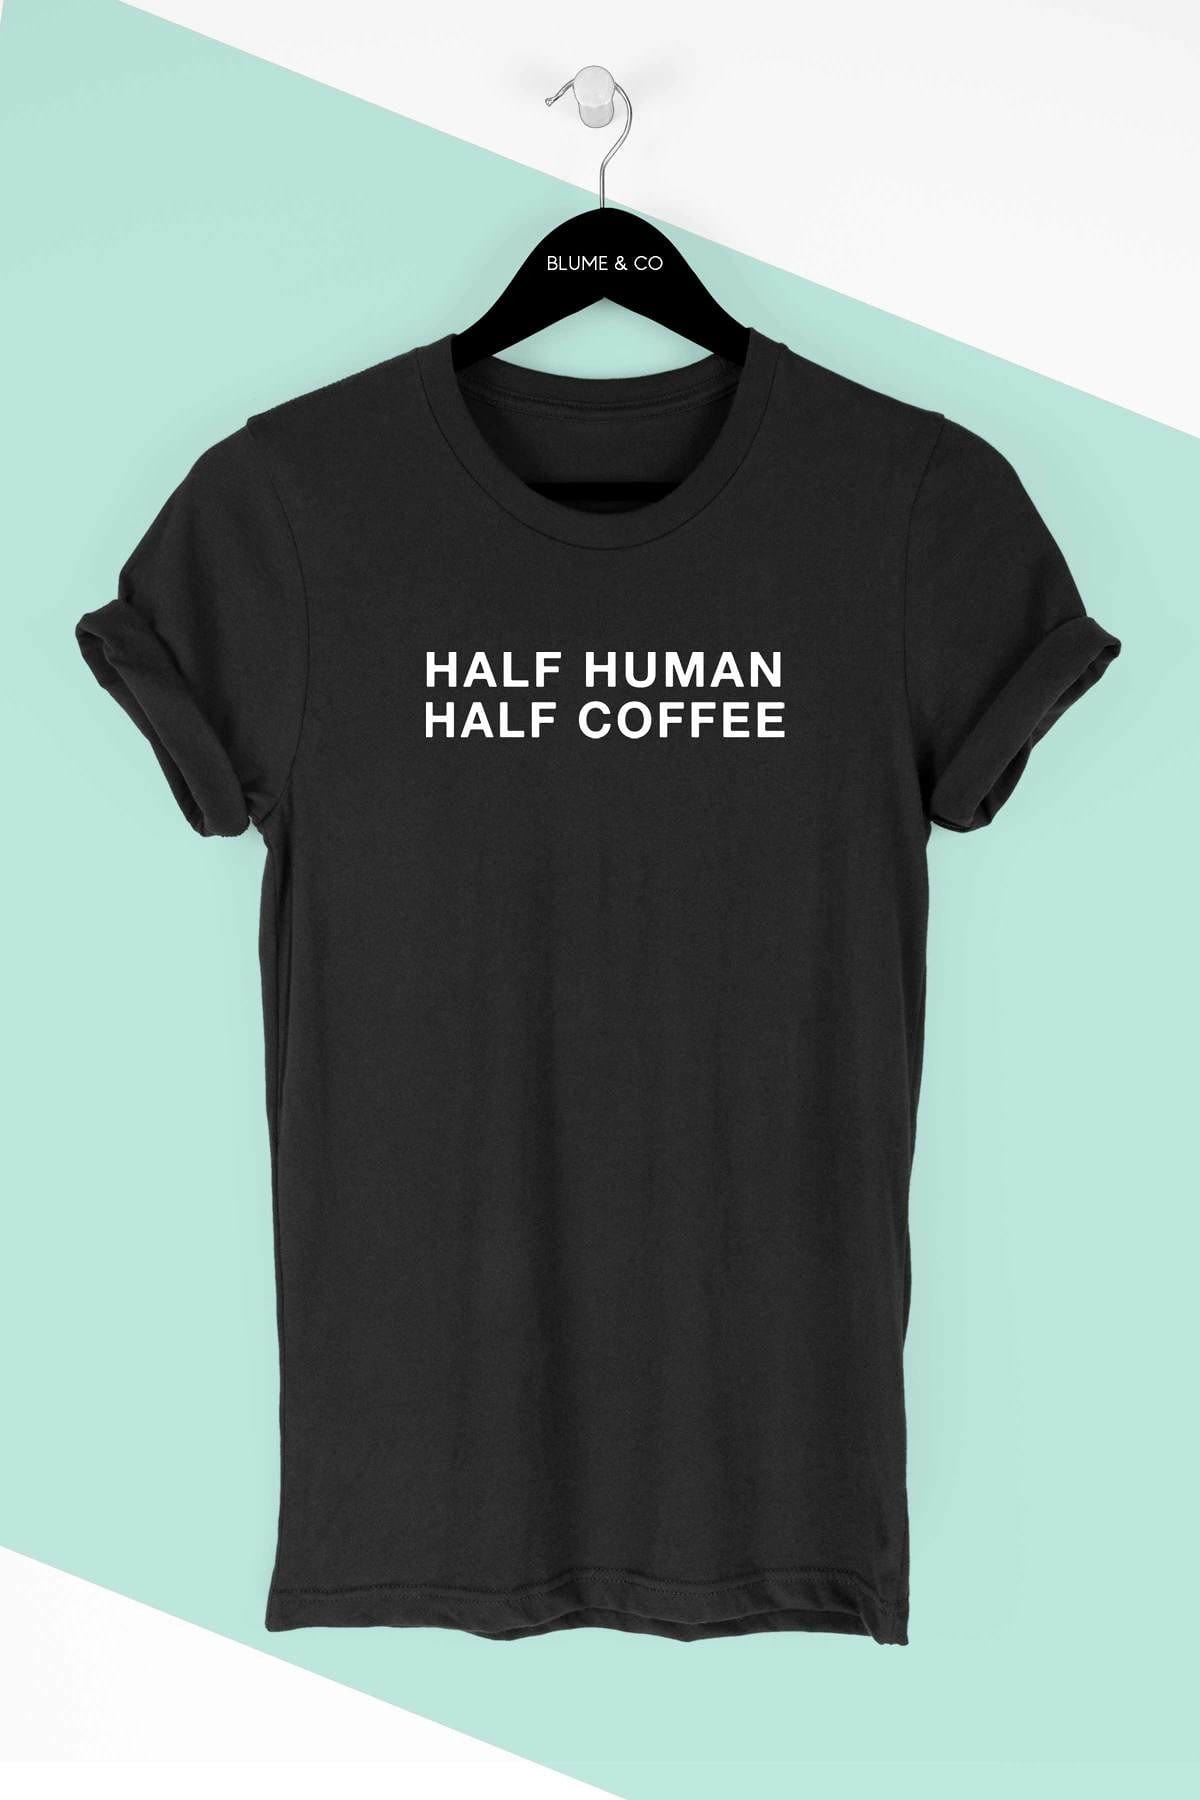 Blume + Co. graphic tee Half Human, Half Coffee Graphic Tee